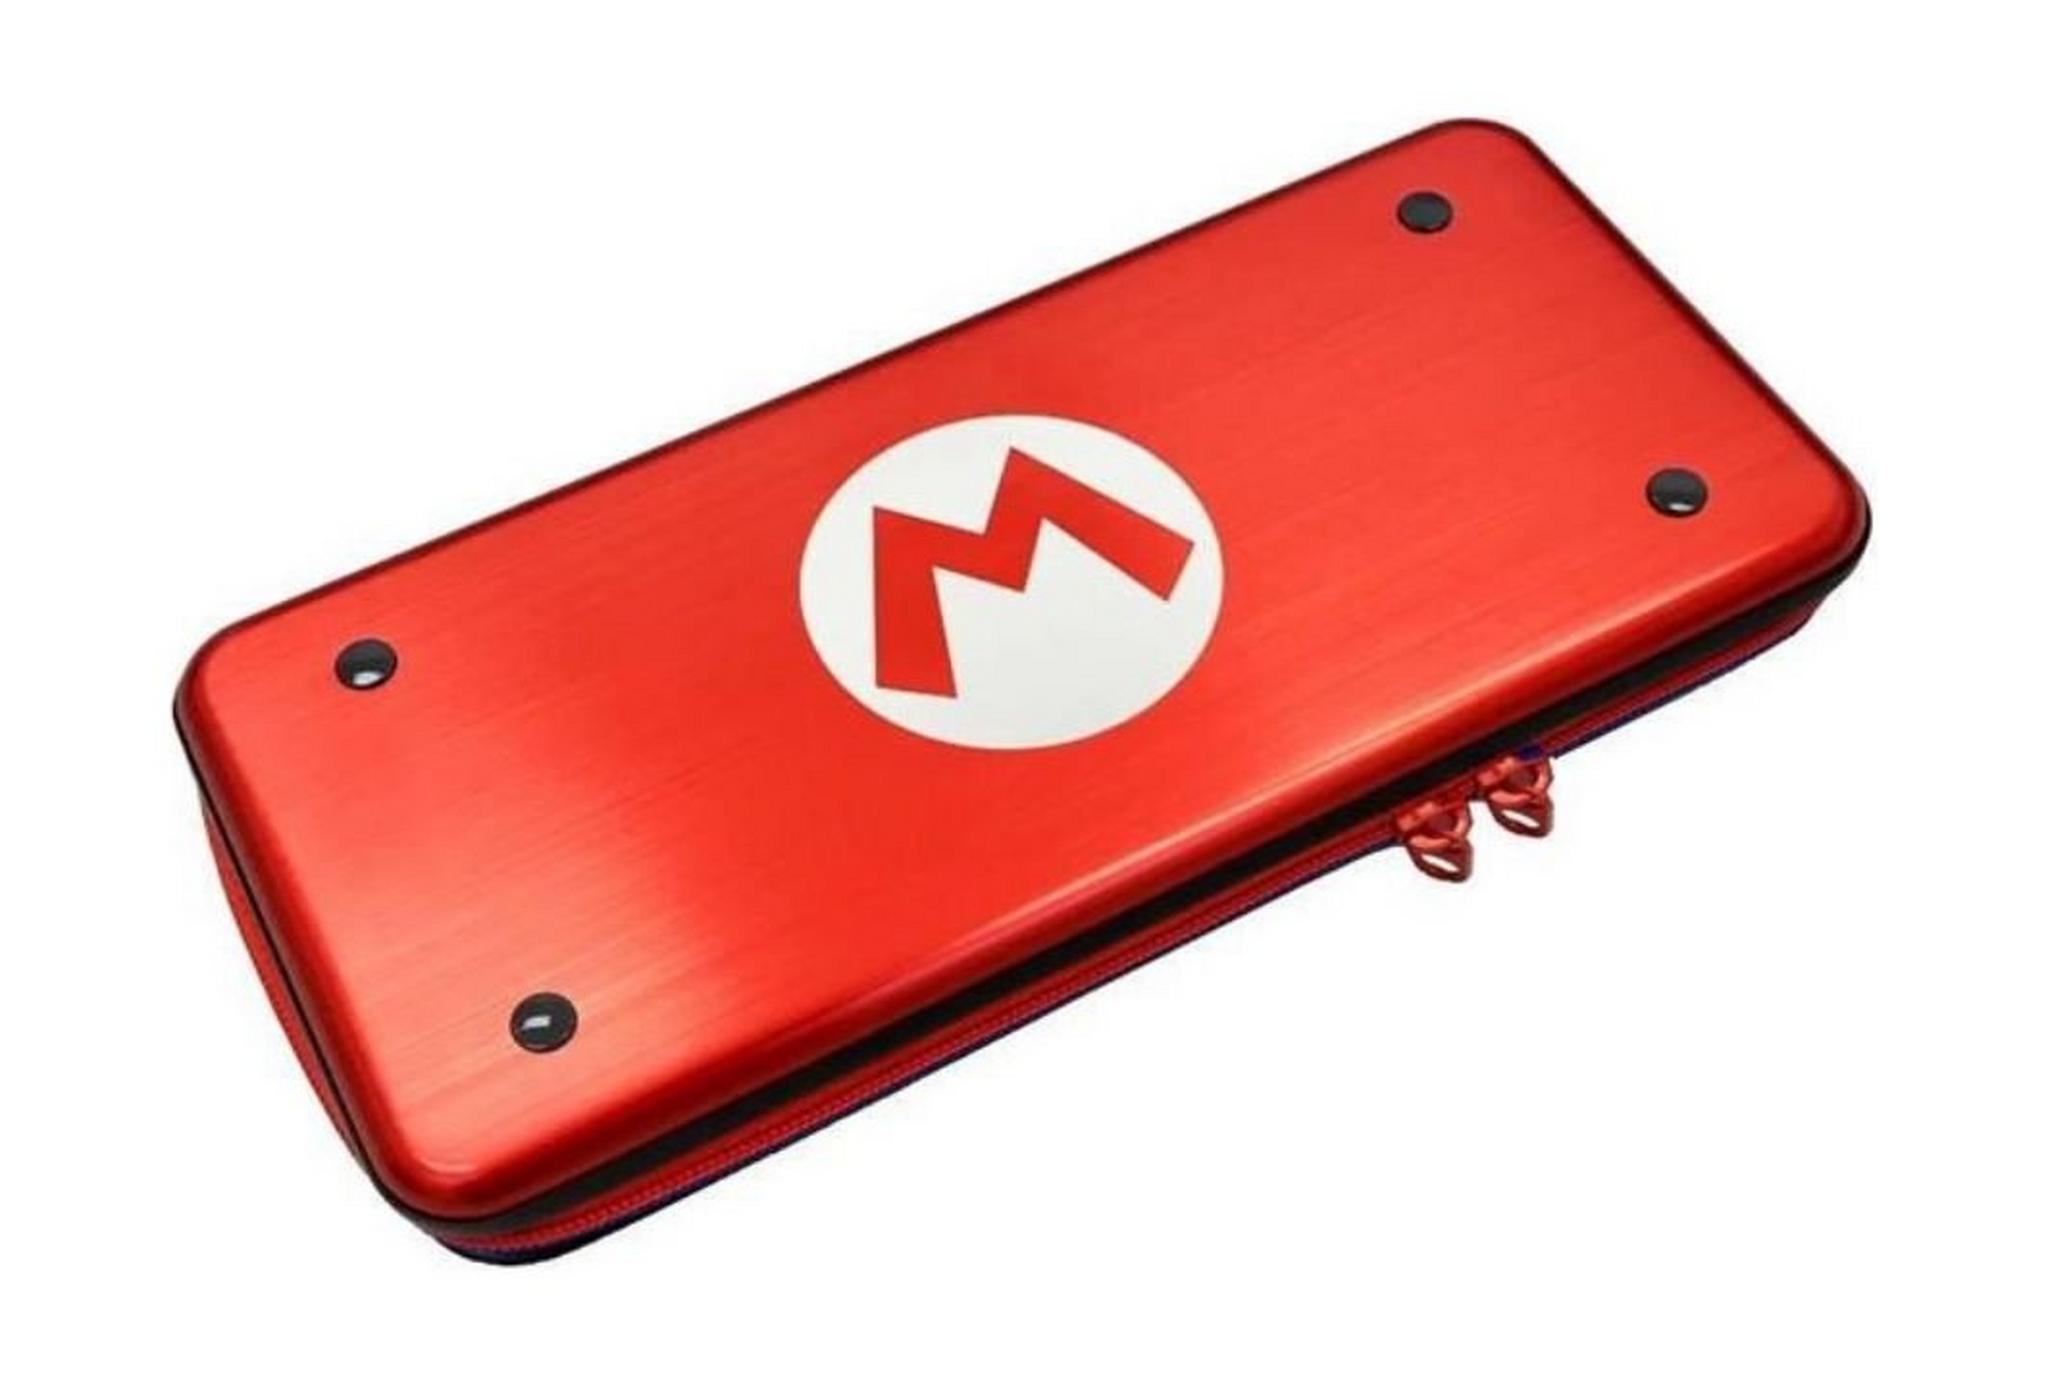 HORI Nintendo Switch Alumi Case - Super Mario Edition